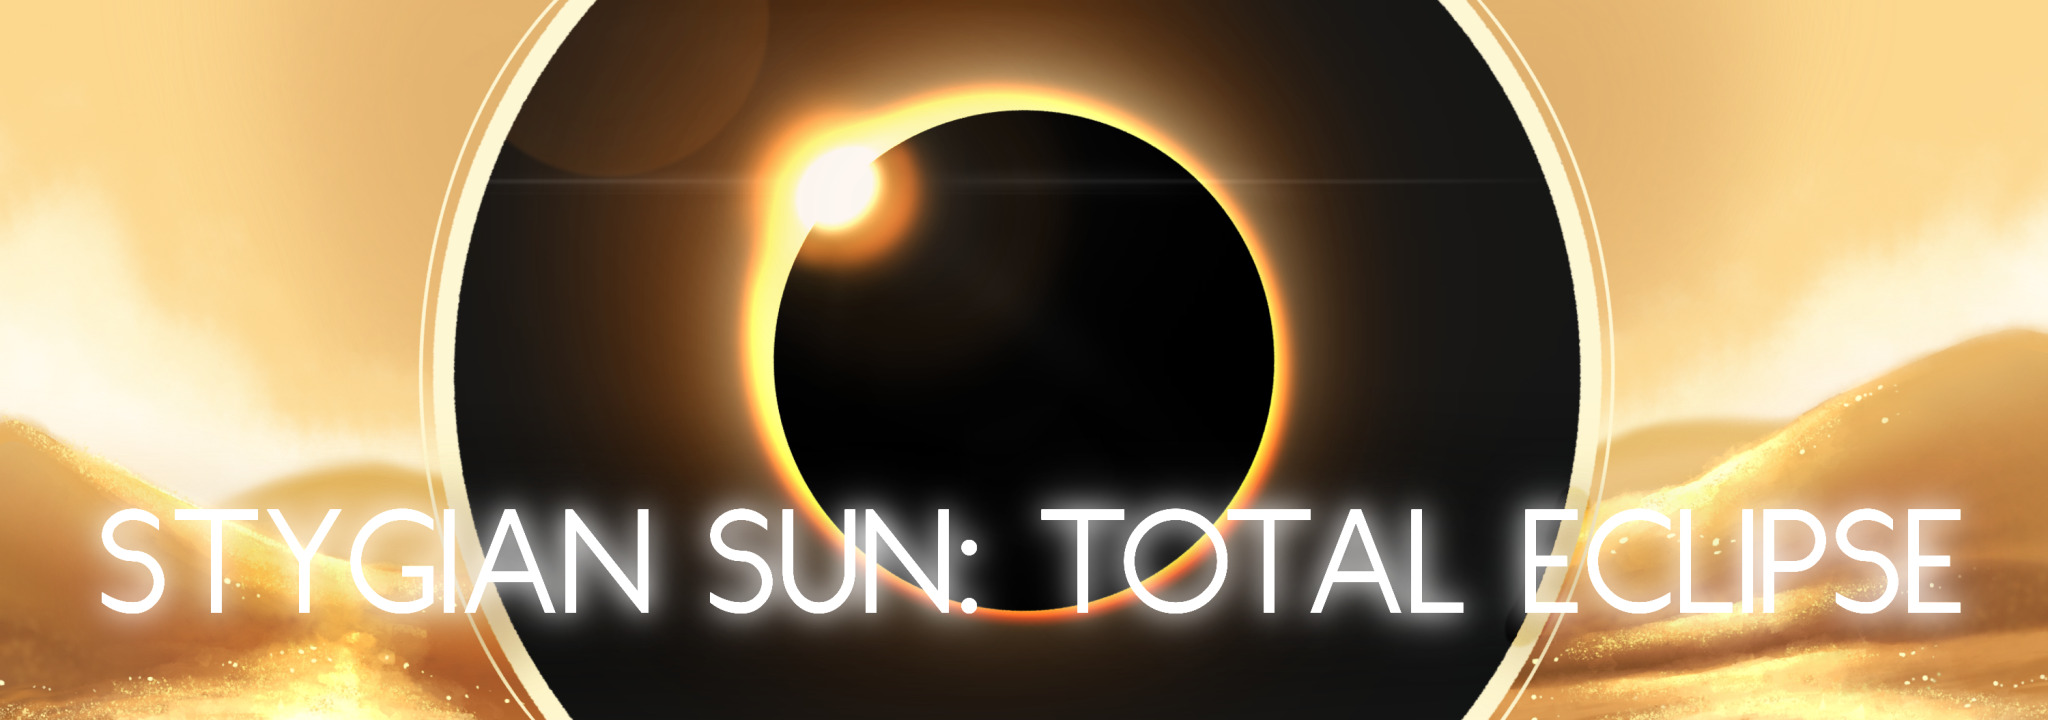 Stygian Sun: Total Eclipse IF